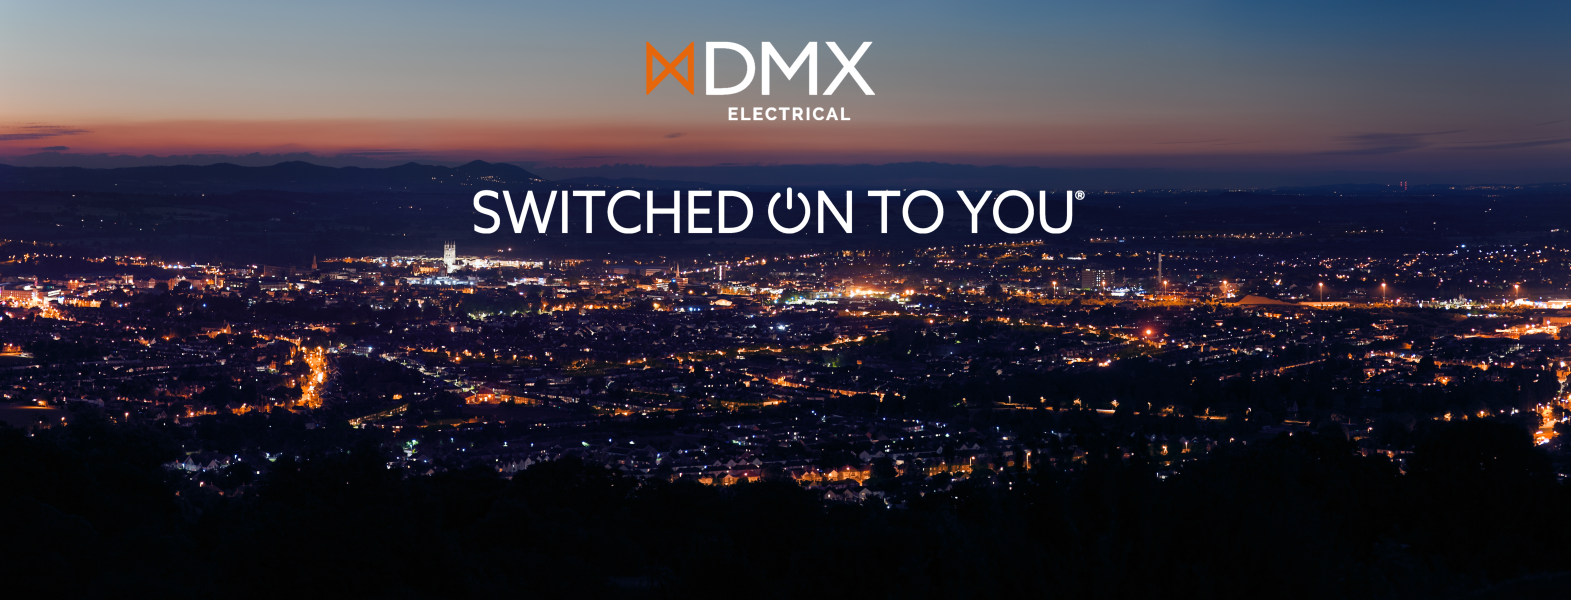 DMX Electrical